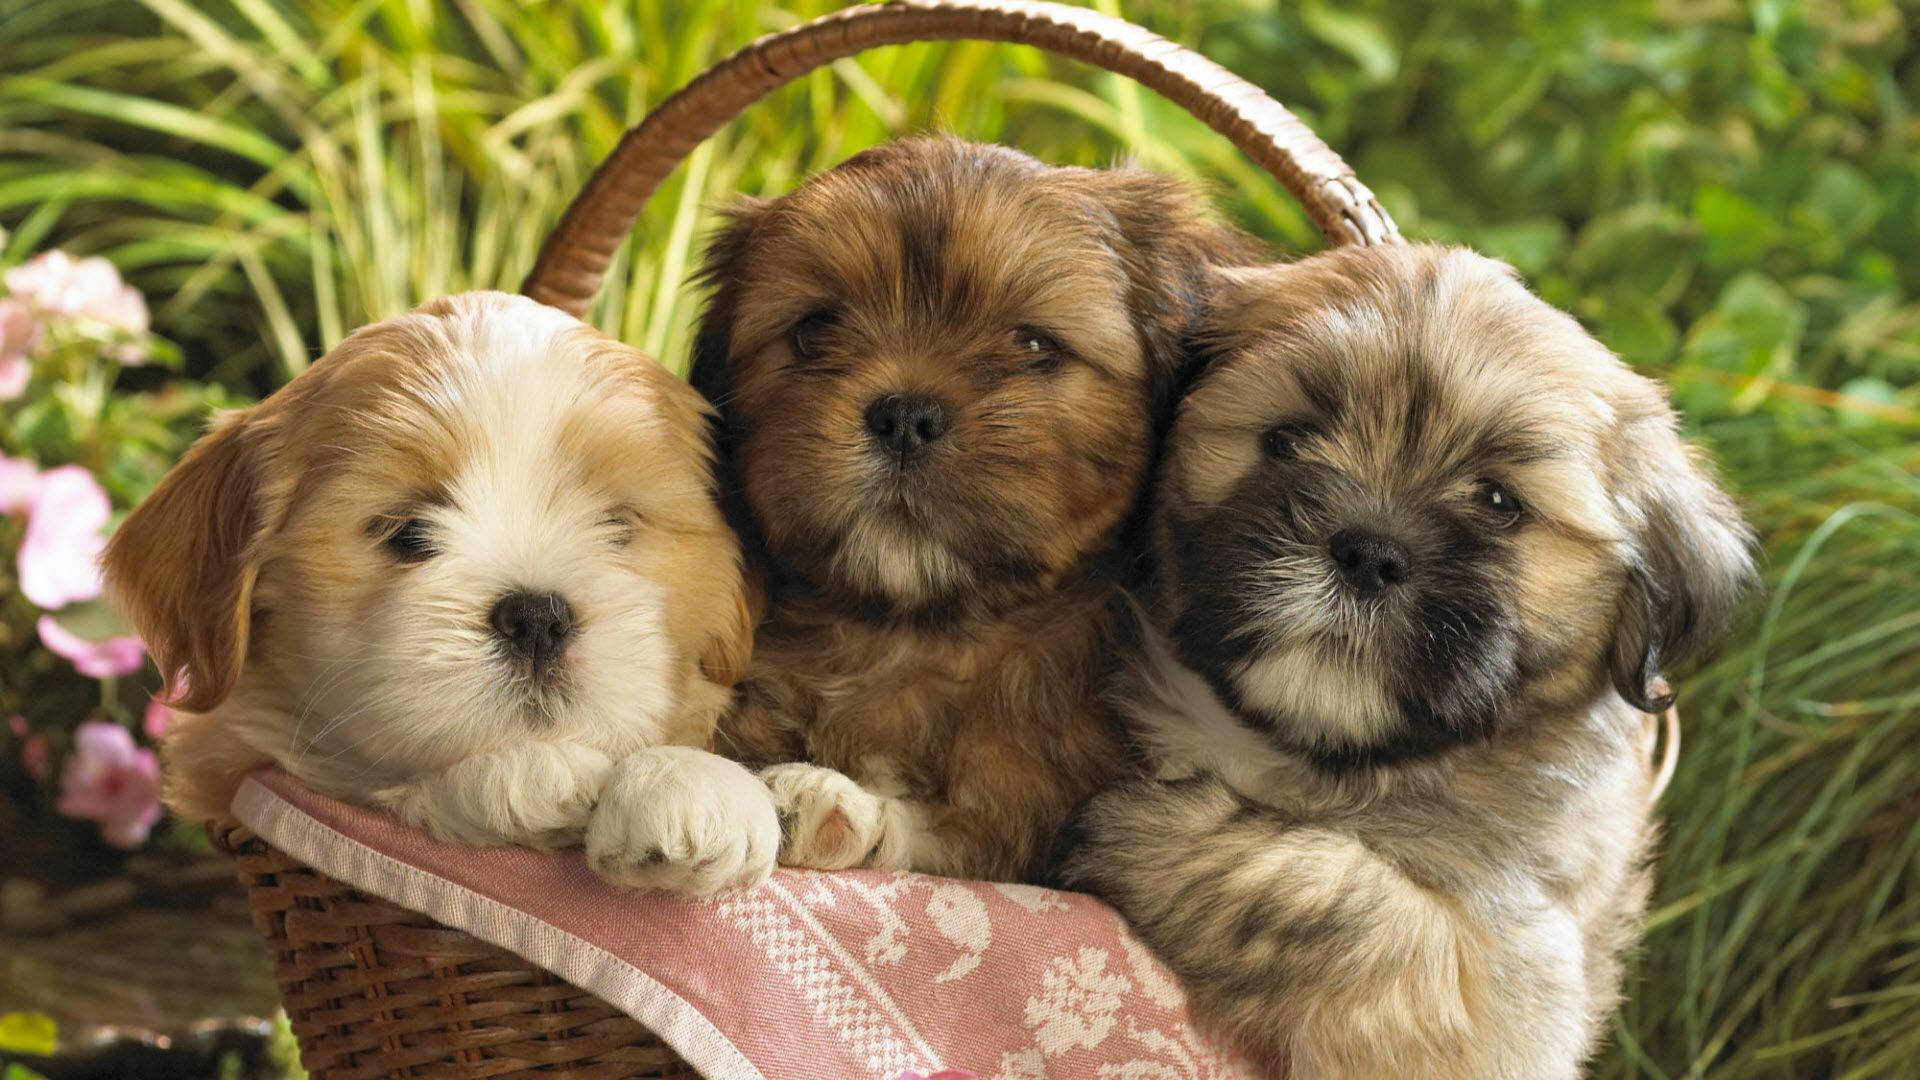 Puppies In The Basket Wallpaper